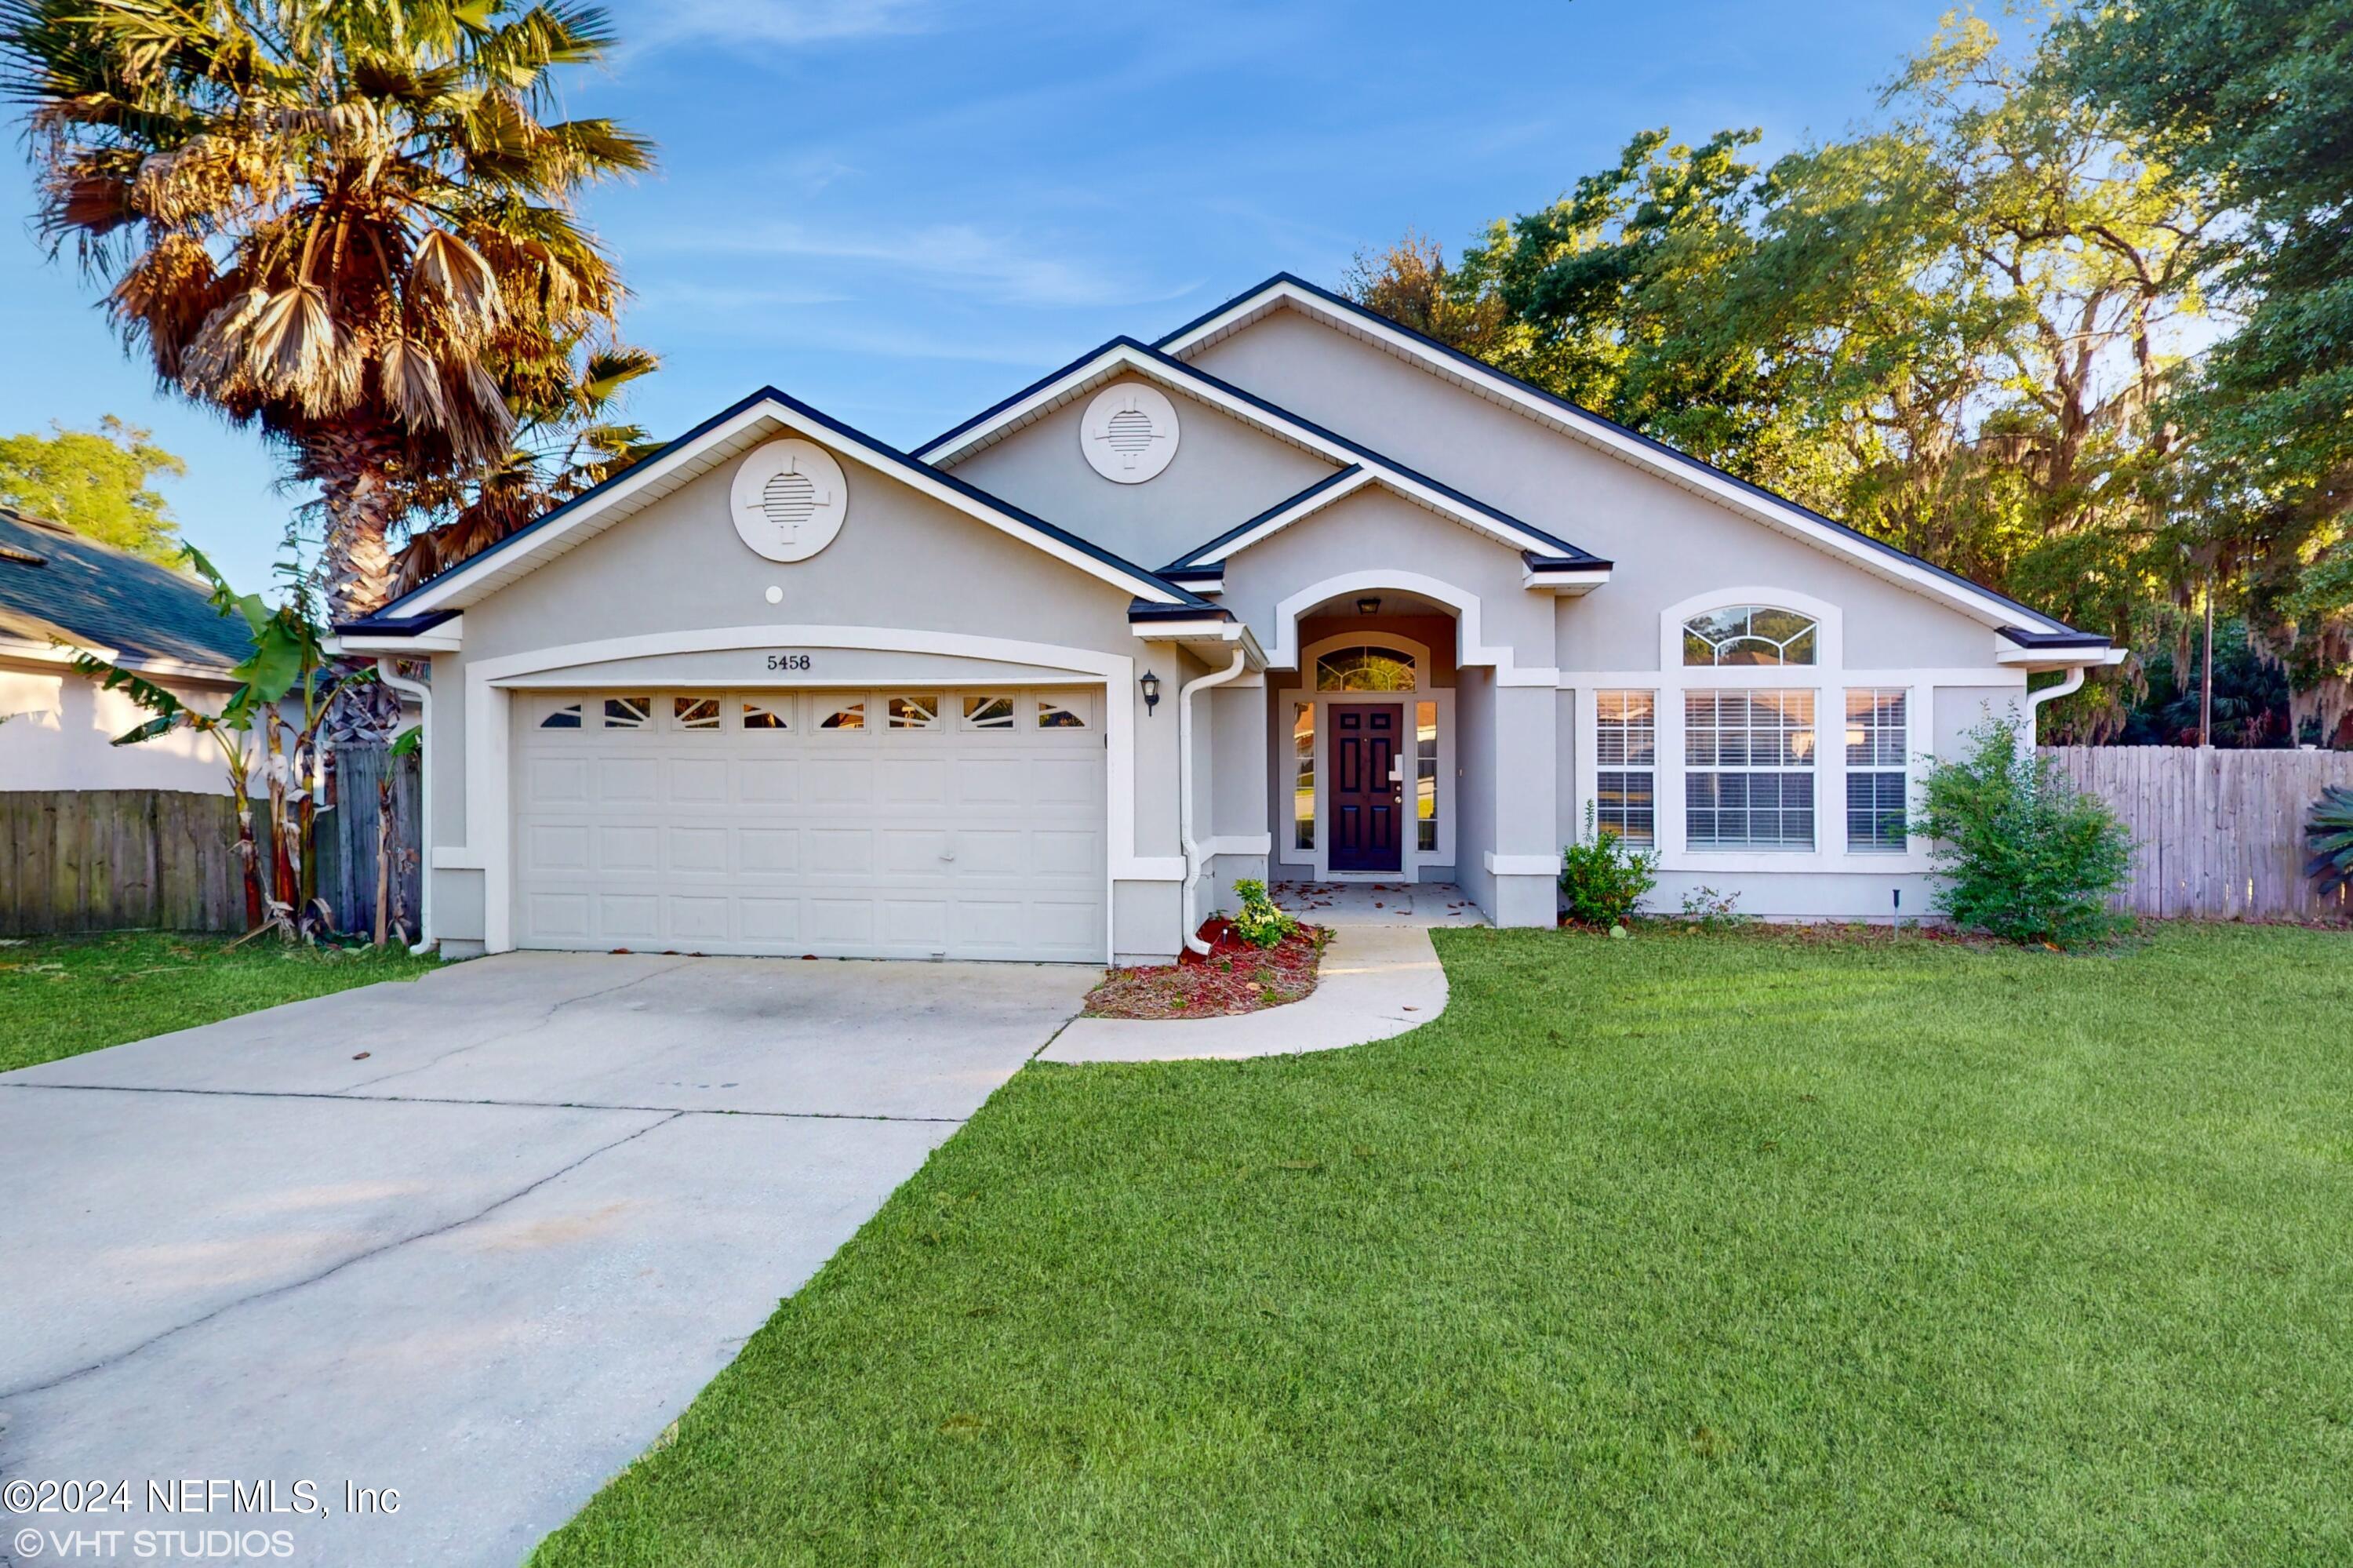 Jacksonville, FL home for sale located at 5458 Catspaw Lane, Jacksonville, FL 32277